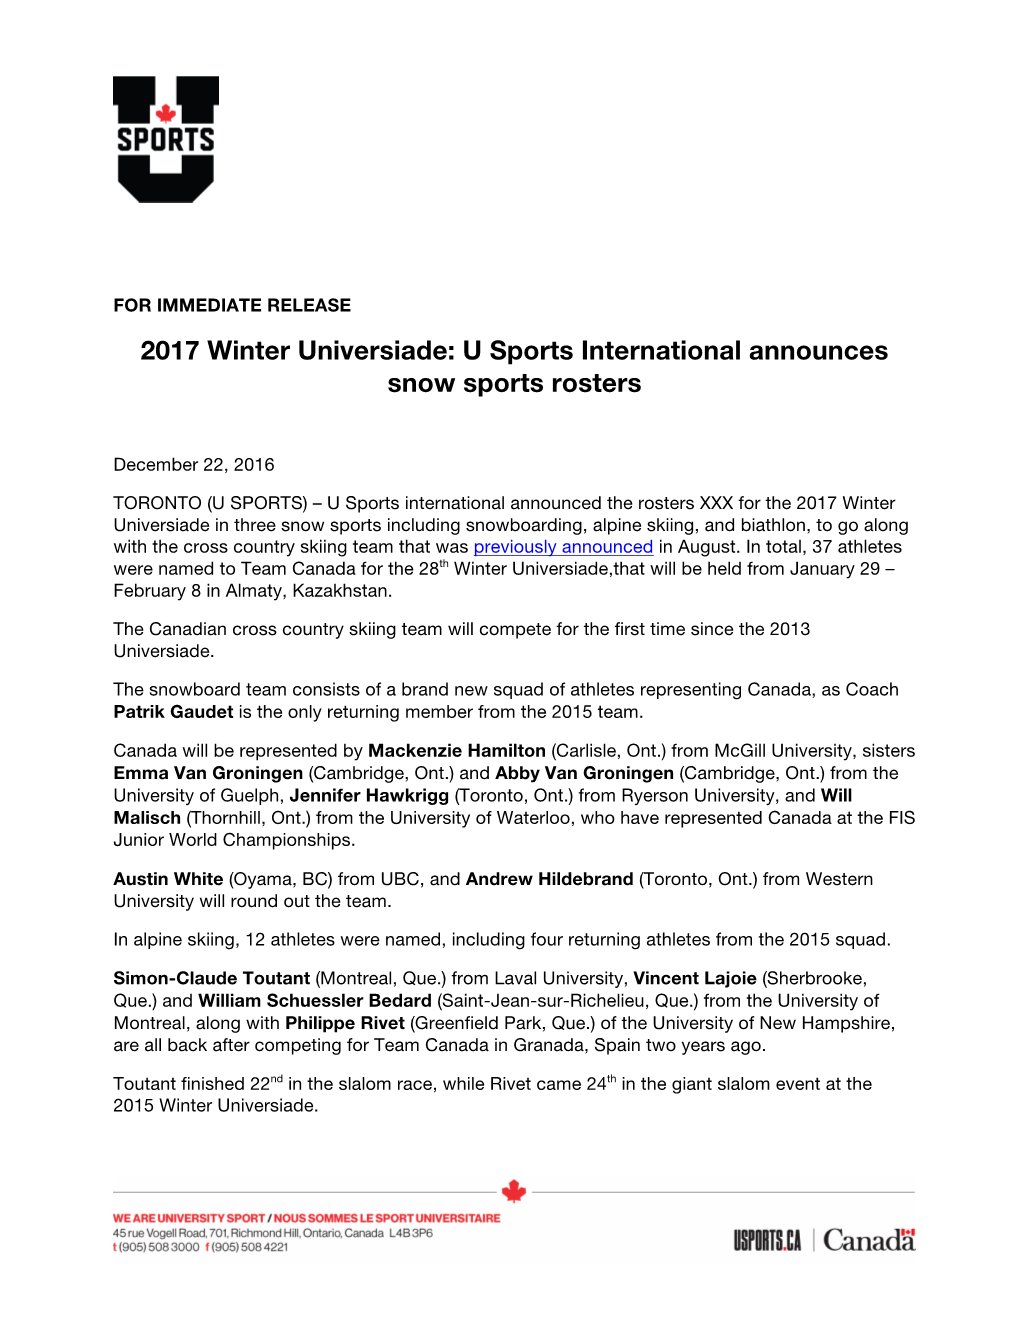 2017 Winter Universiade: U Sports International Announces Snow Sports Rosters